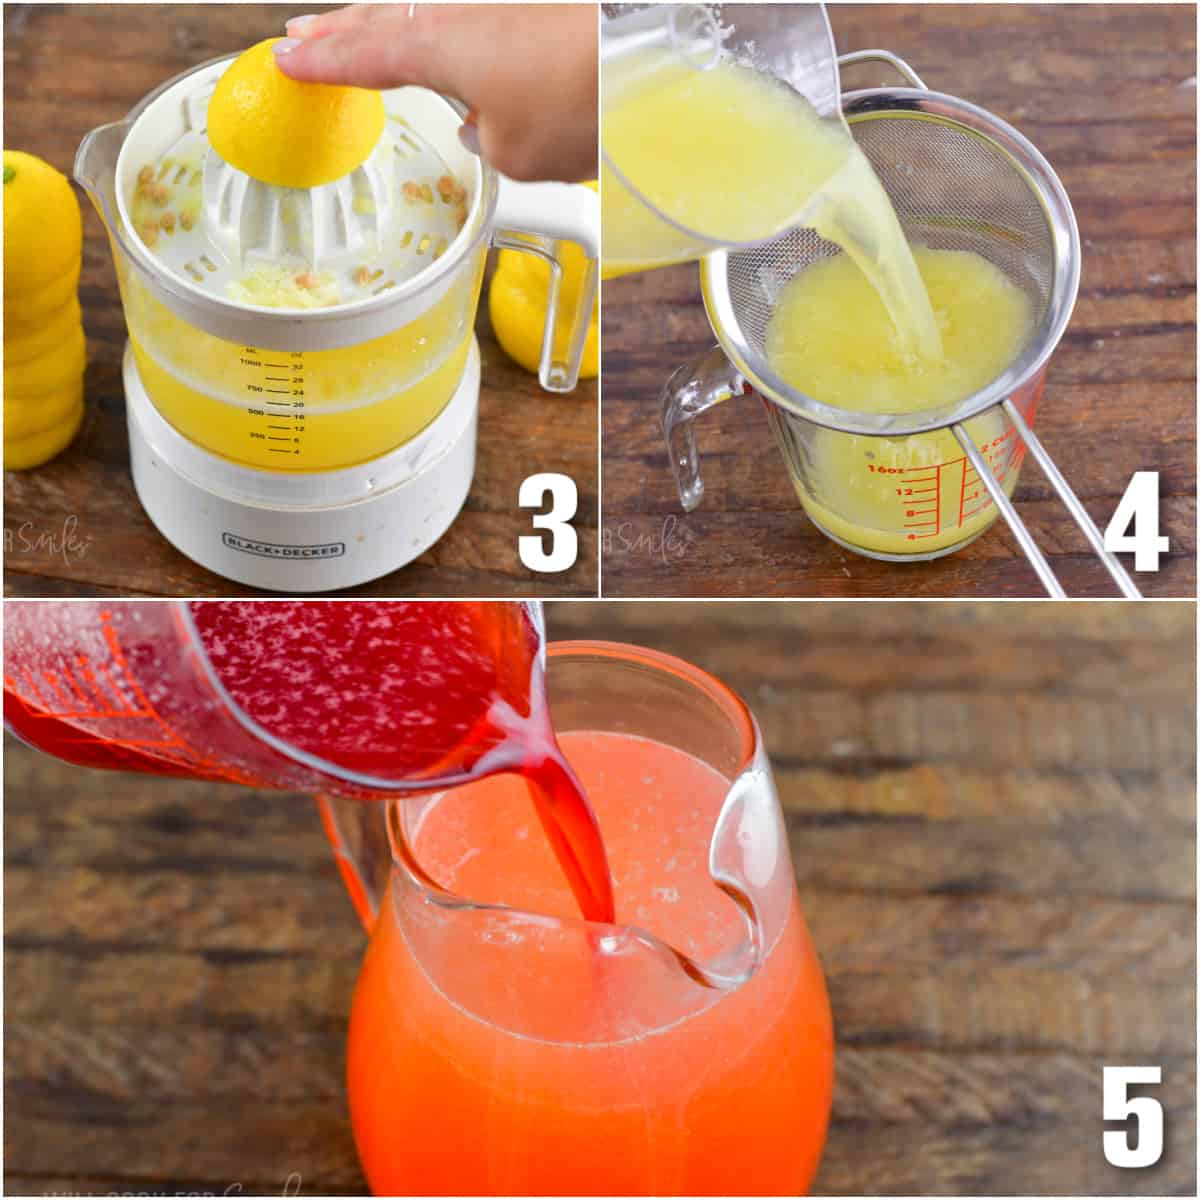 collage of there images of juicing lemons, straining lemon juice, and adding strawberry juice.